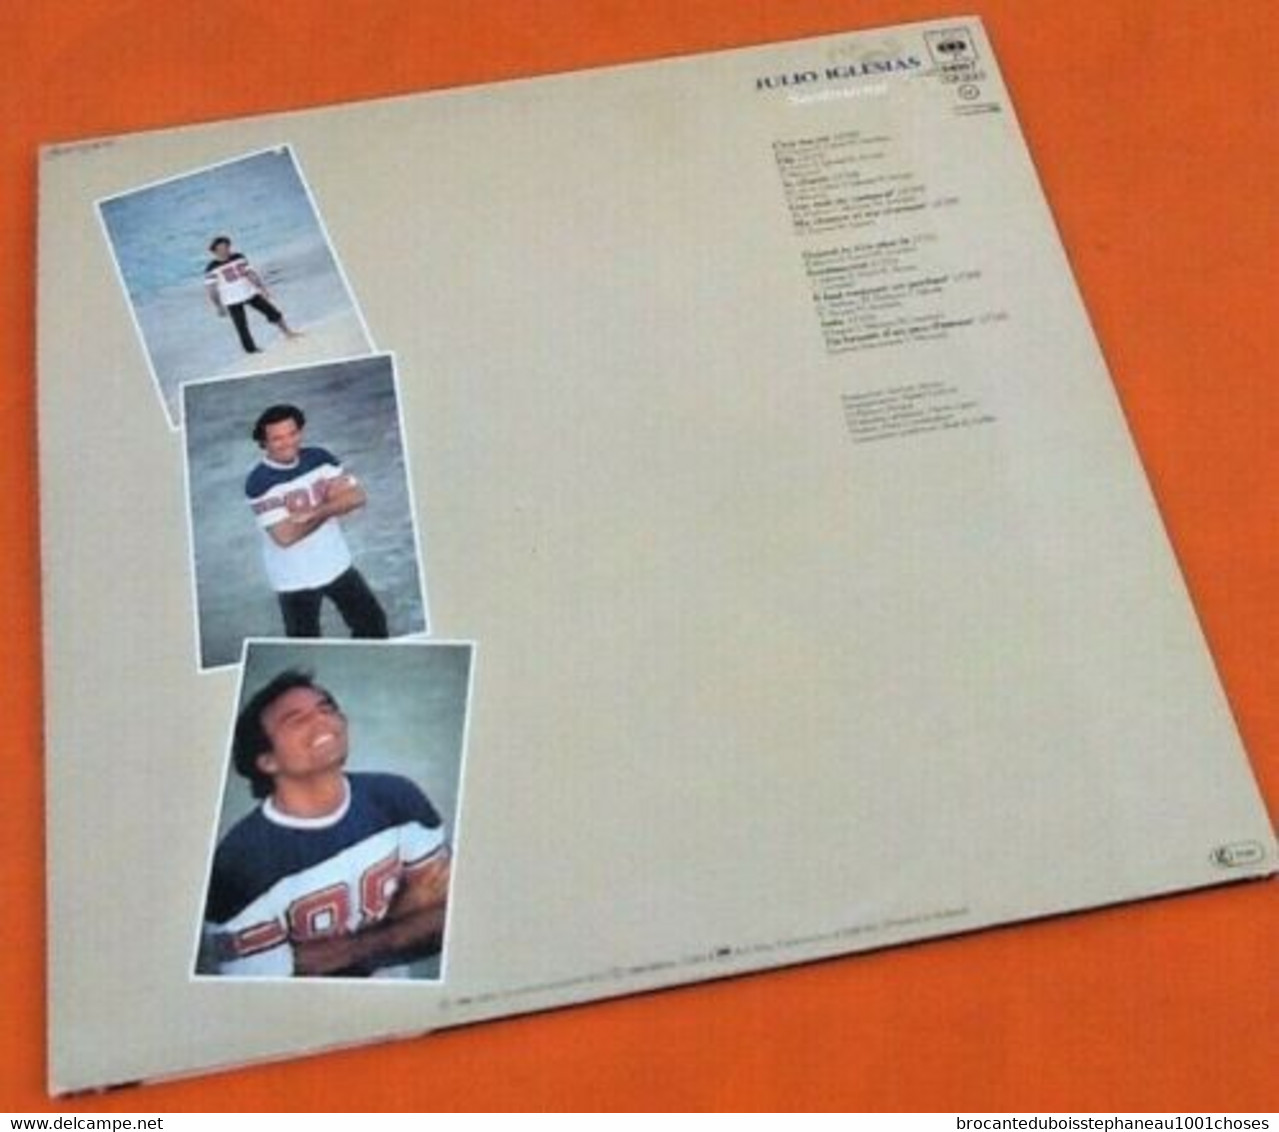 Album Vinyle 33 Tours  Julio Iglesias  Sentimental (1980) CBS 84357 - Sonstige - Italienische Musik